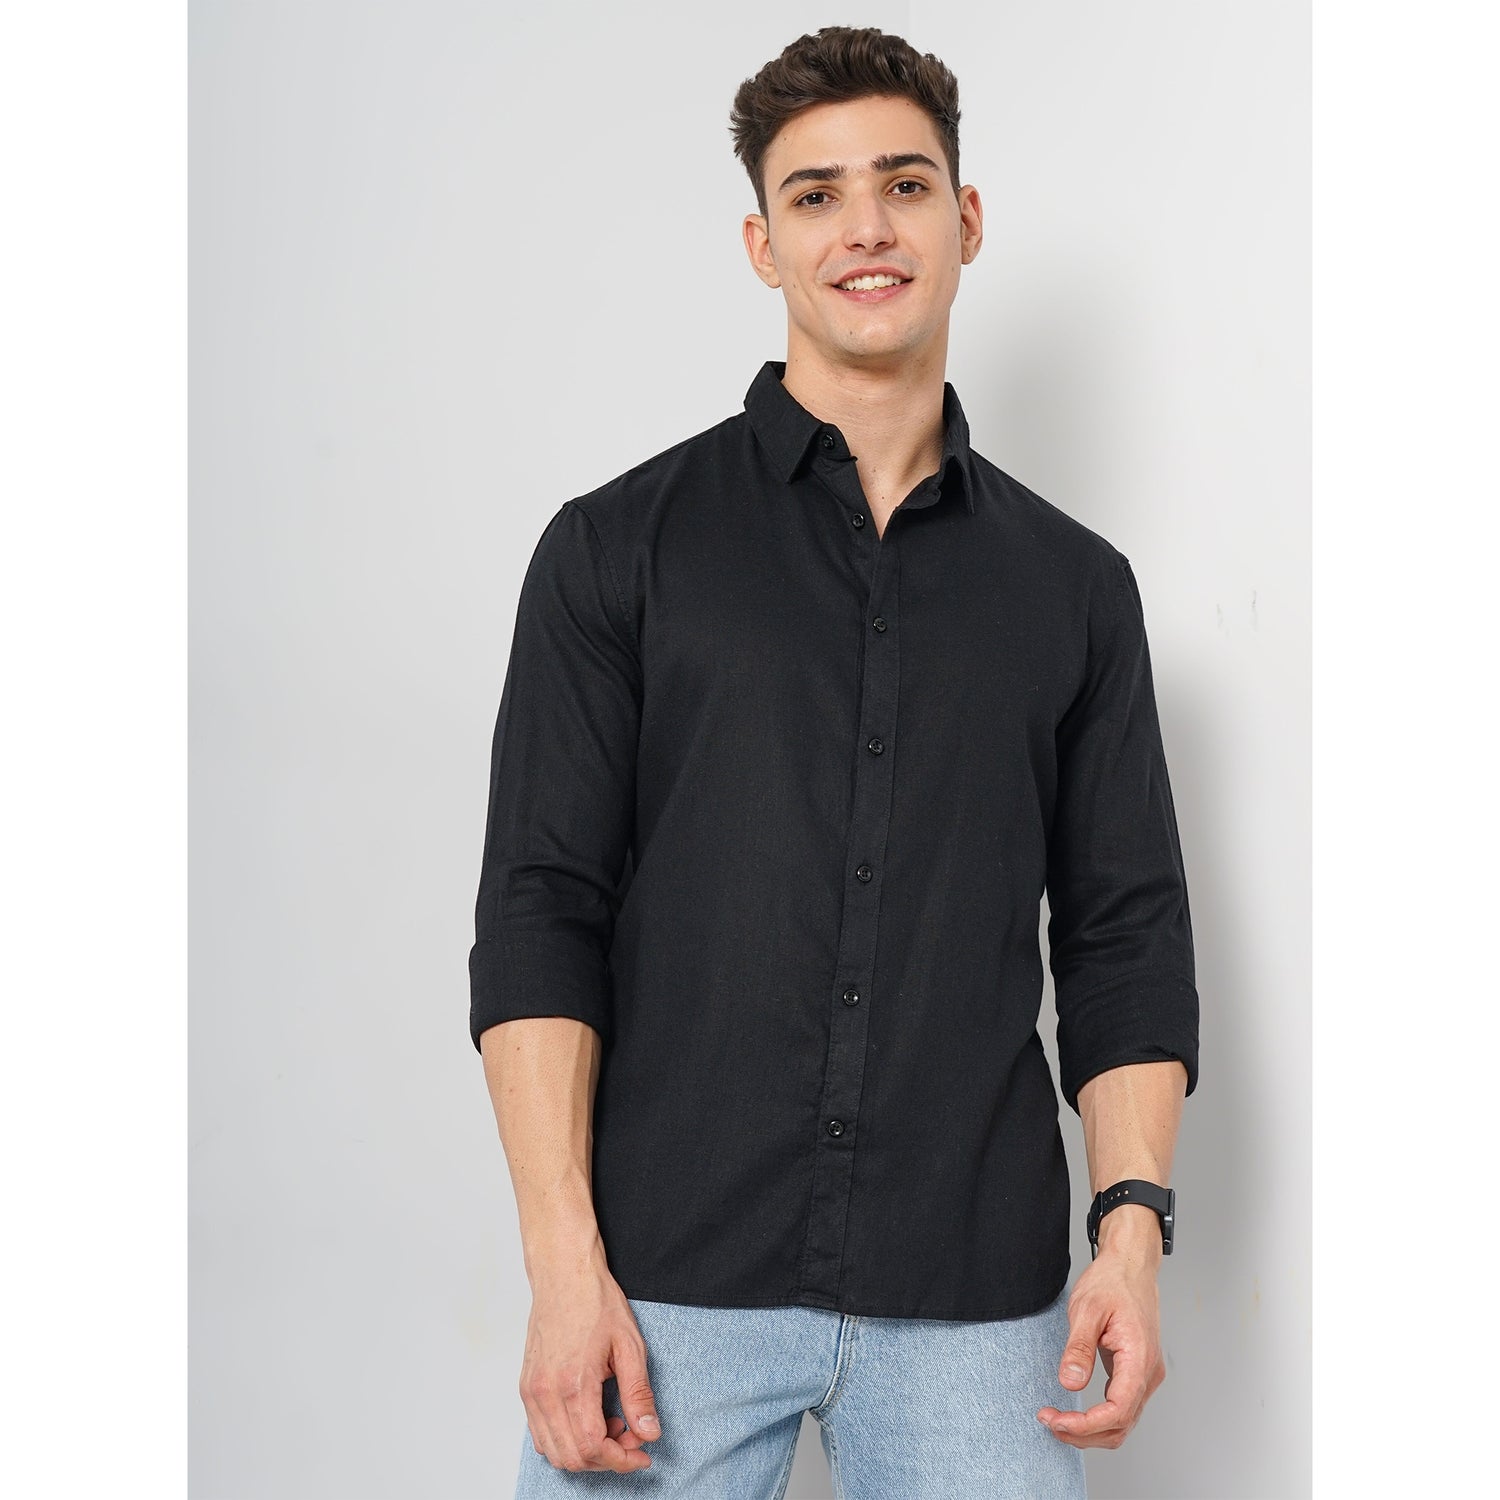 Solid Black Full Linen Shirt (FAMODLIN)